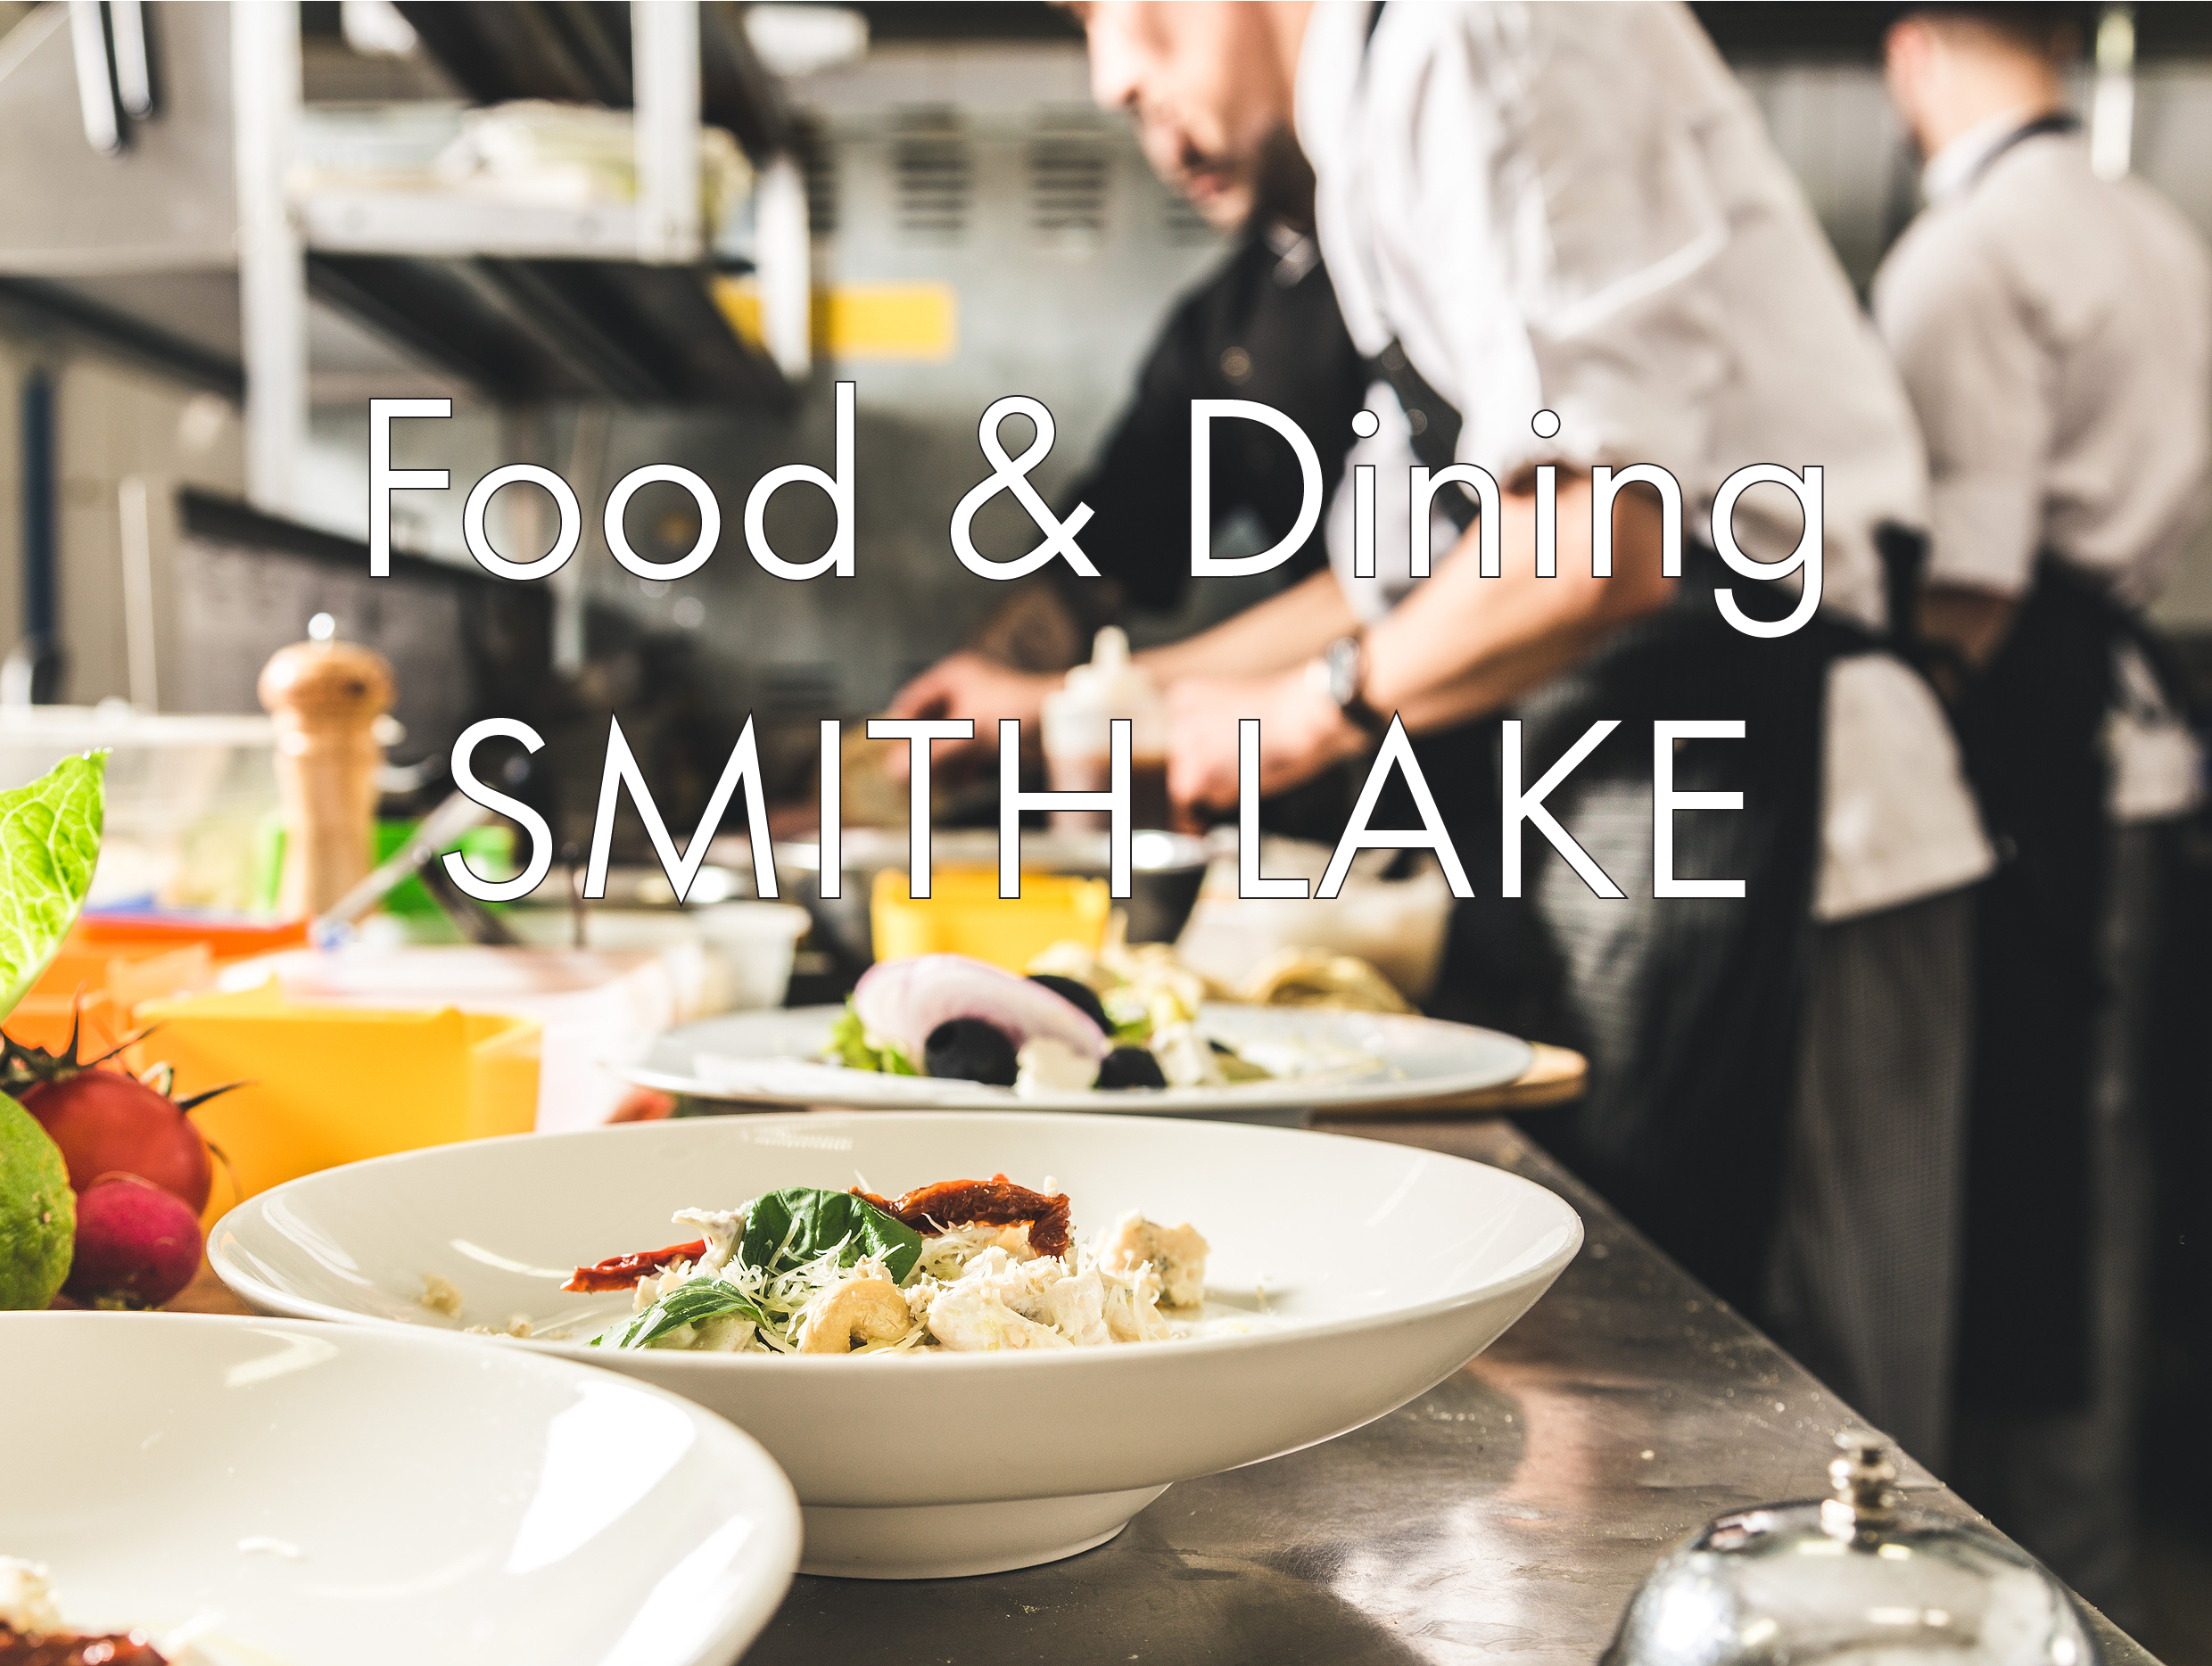 Smith Lake – Food & Dining